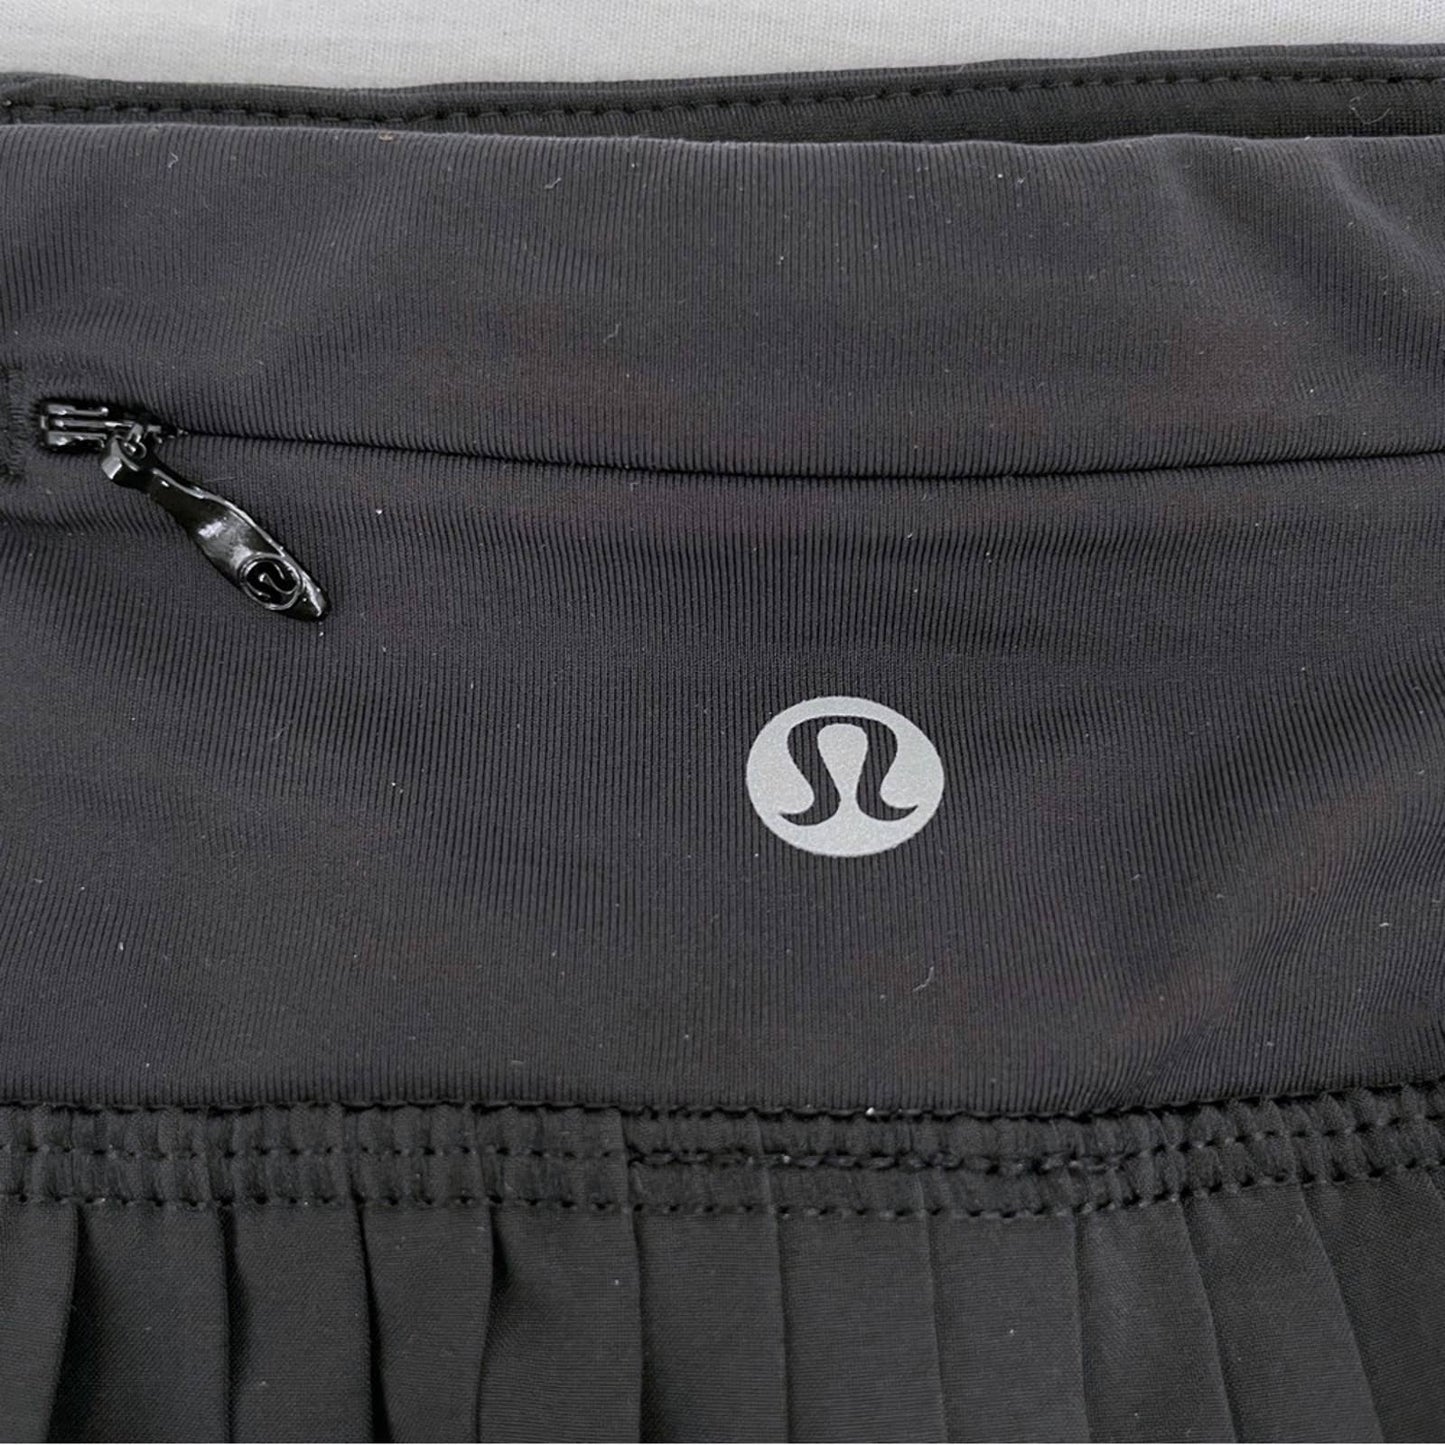 Lululemon Pleat to Street II Black Skirt Skort Golf Tennis Ballerina Twirly Size 6